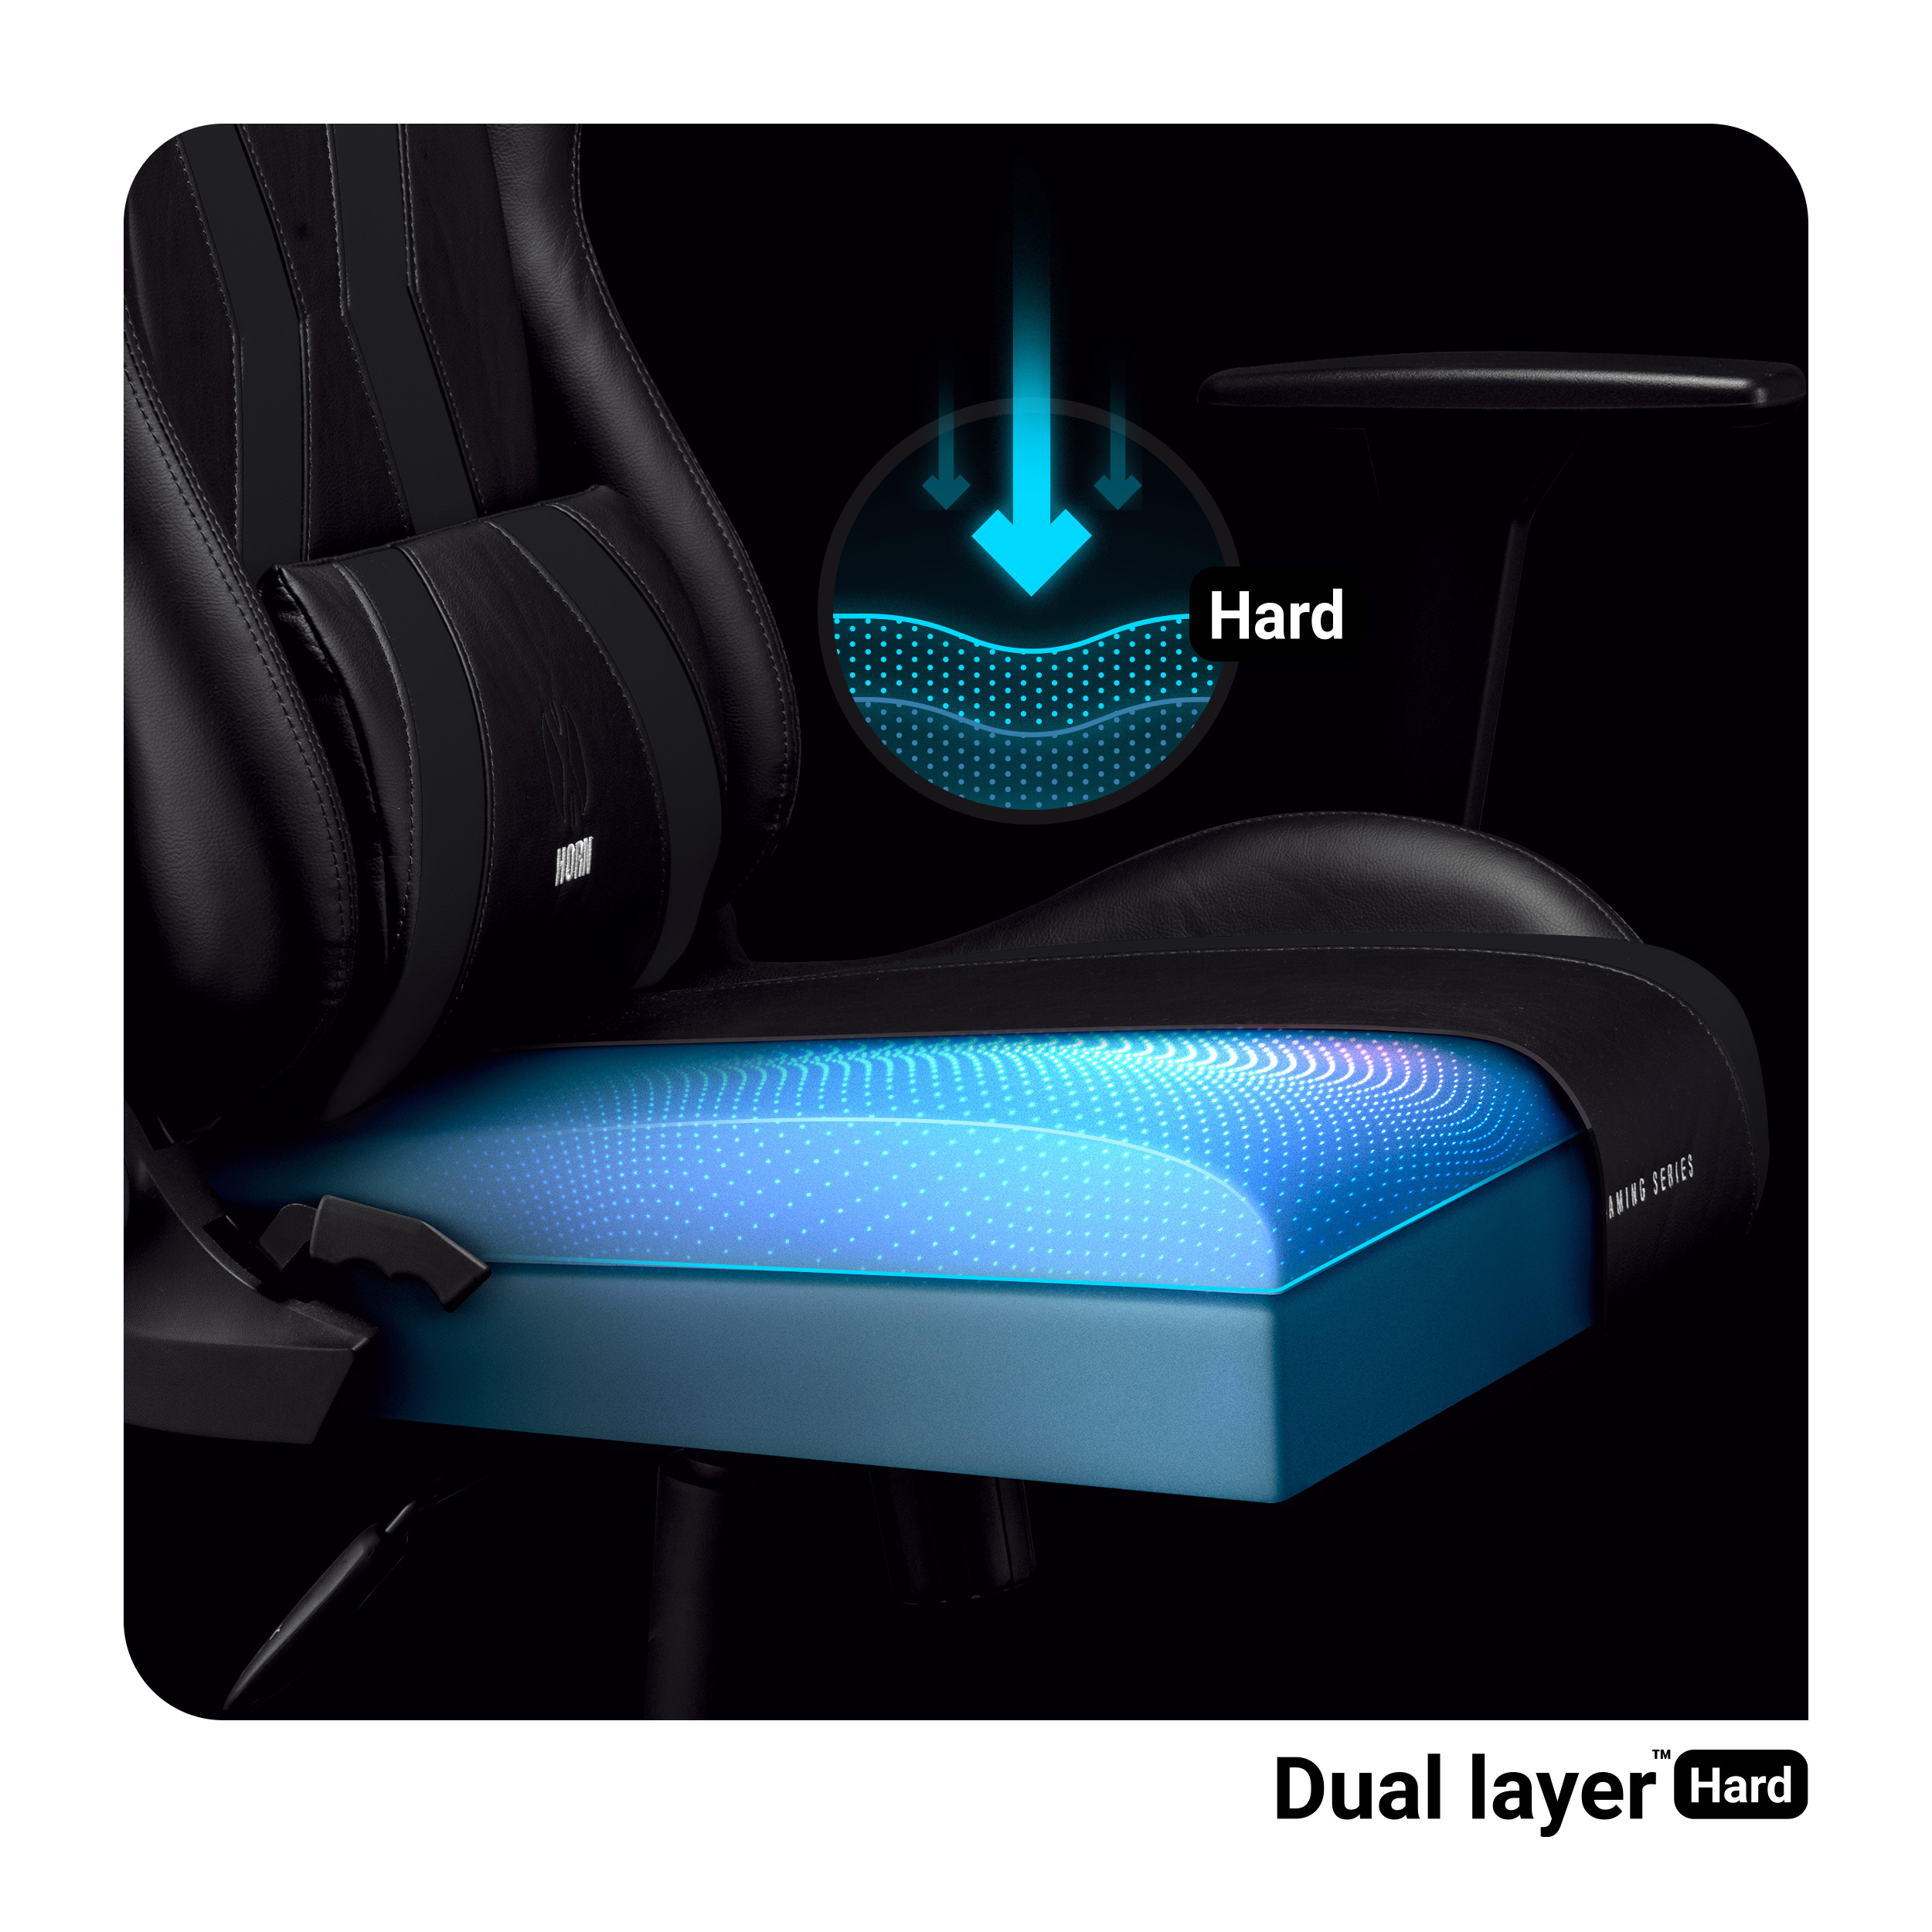 X-HORN NORMAL CHAIRS DIABLO GAMING STUHL black Chair, Gaming 2.0